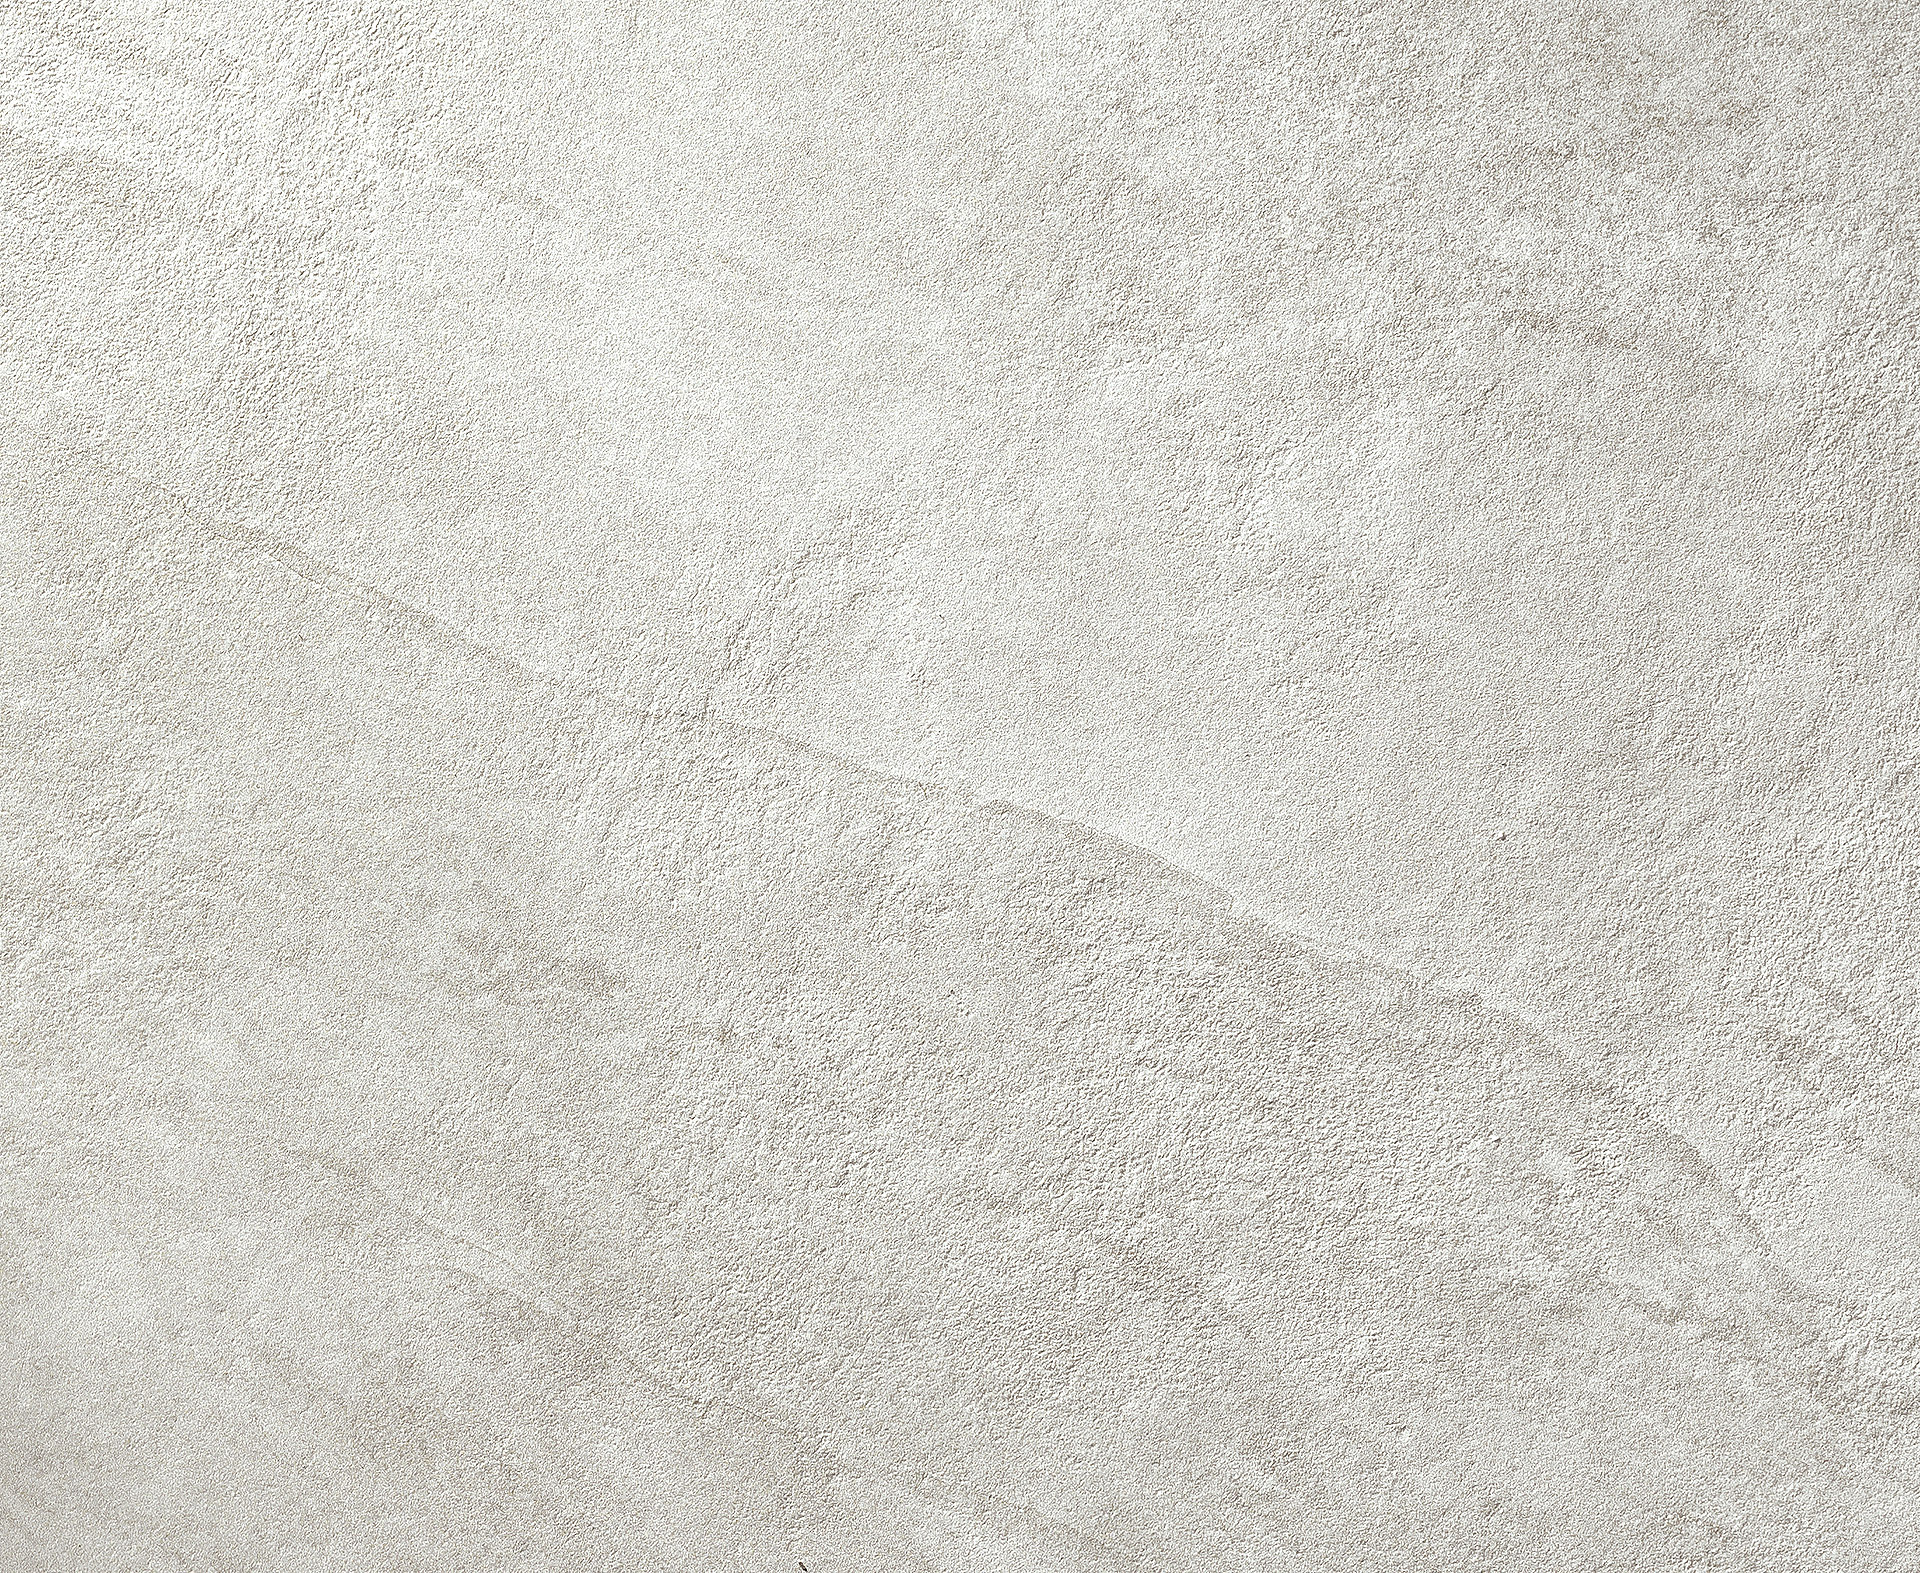 PLANET WHITE NATURAL Light Grey Stone tile   60 x 120 cm